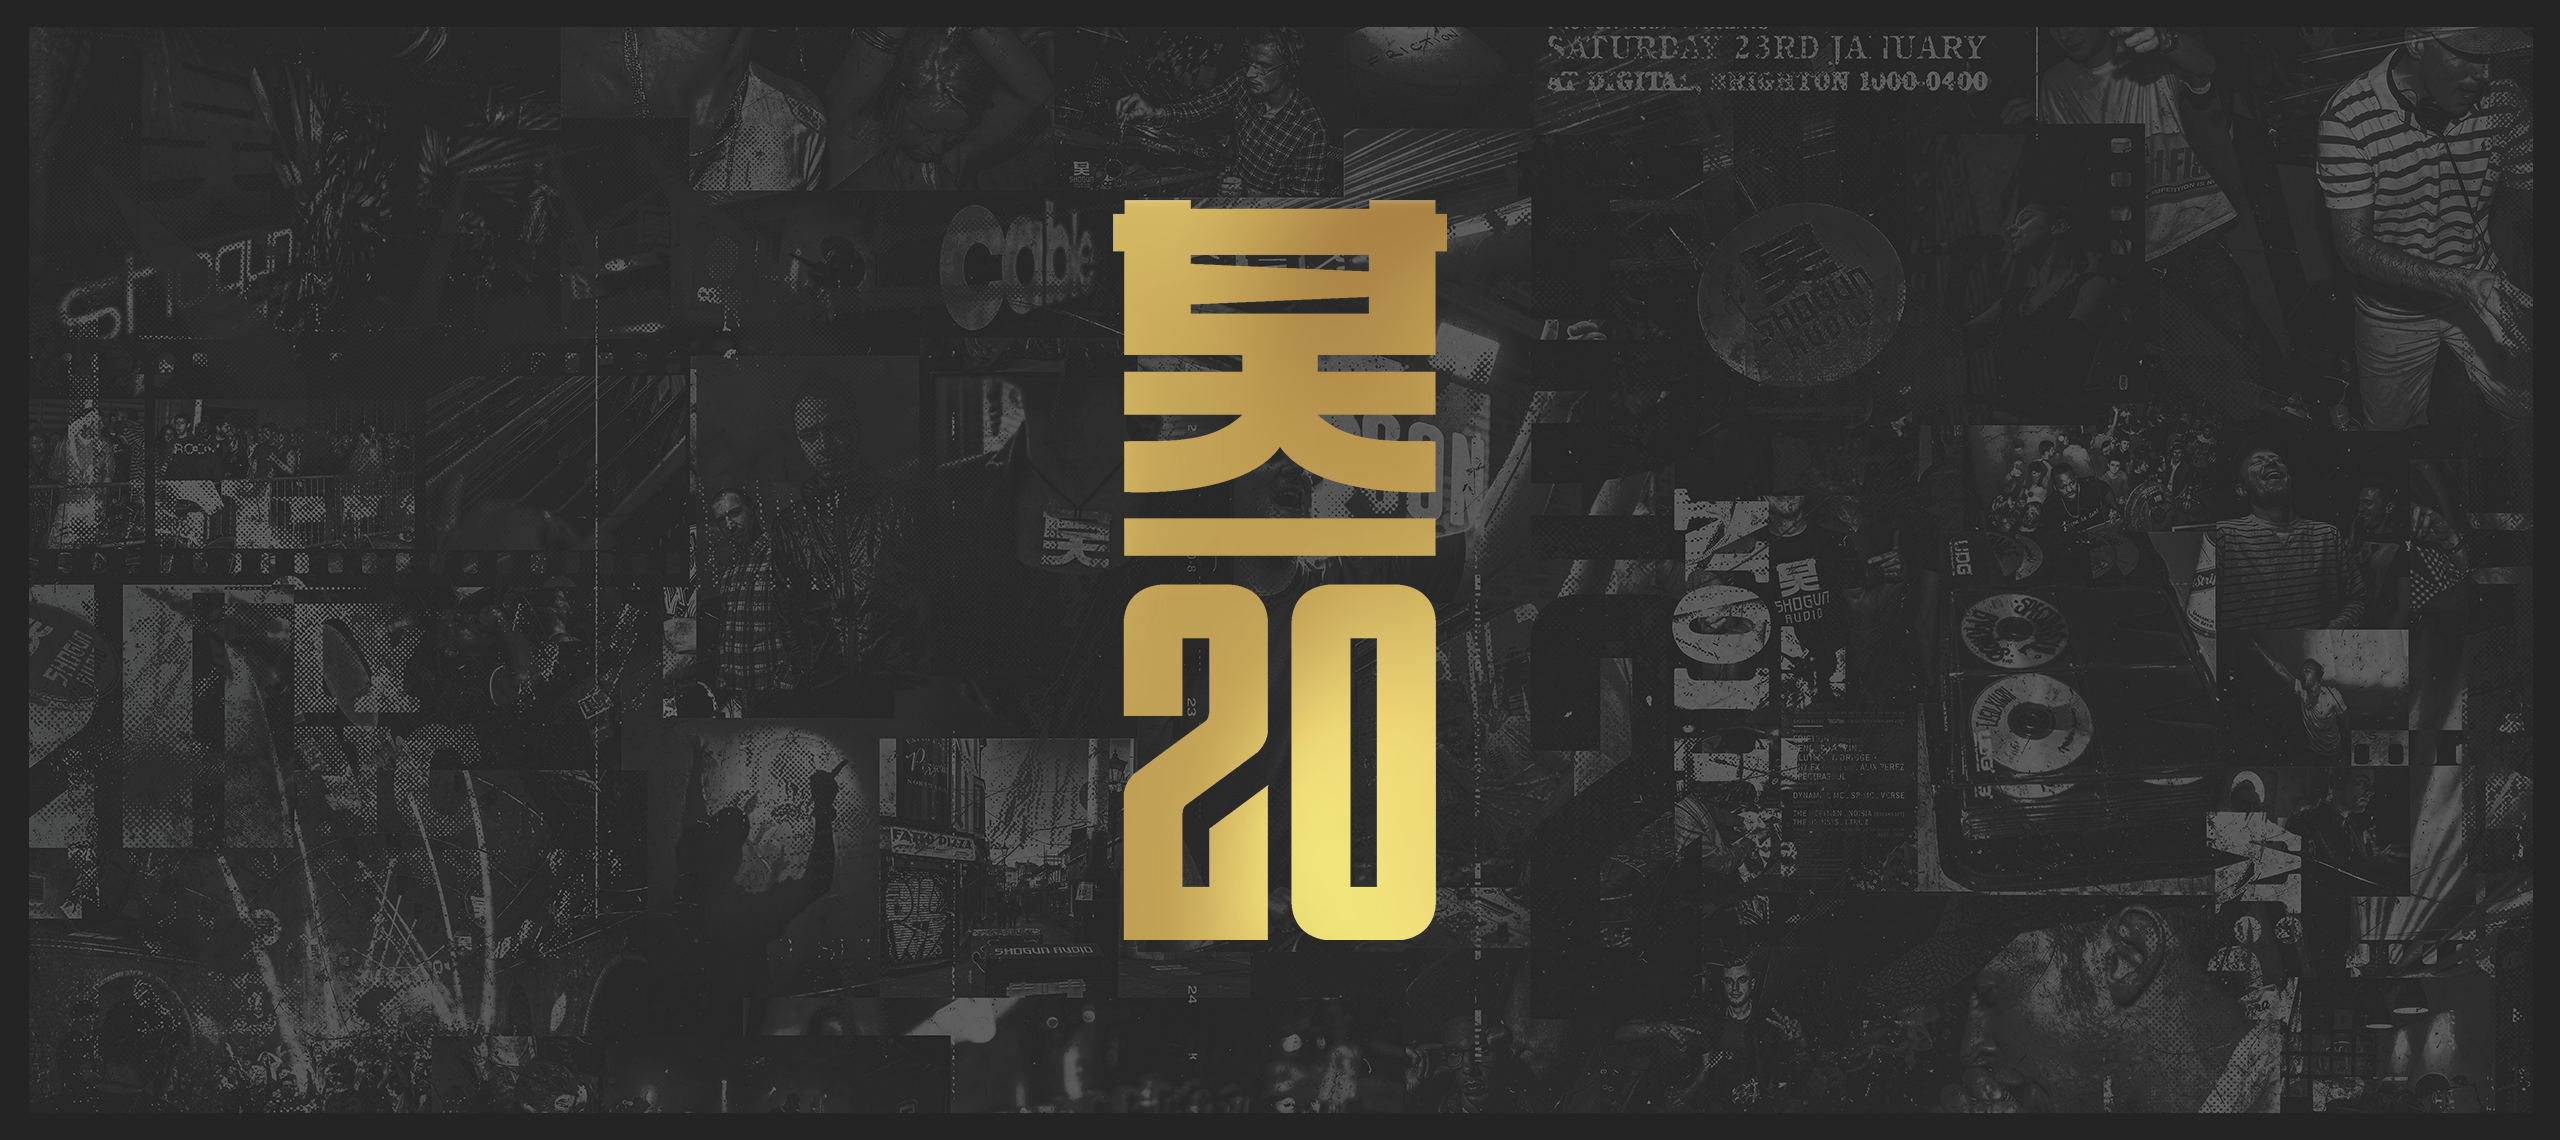 Legendary DnB label Shogun Audio celebrates 20th anniversary with new LP 20 Years Of Shogun Audio